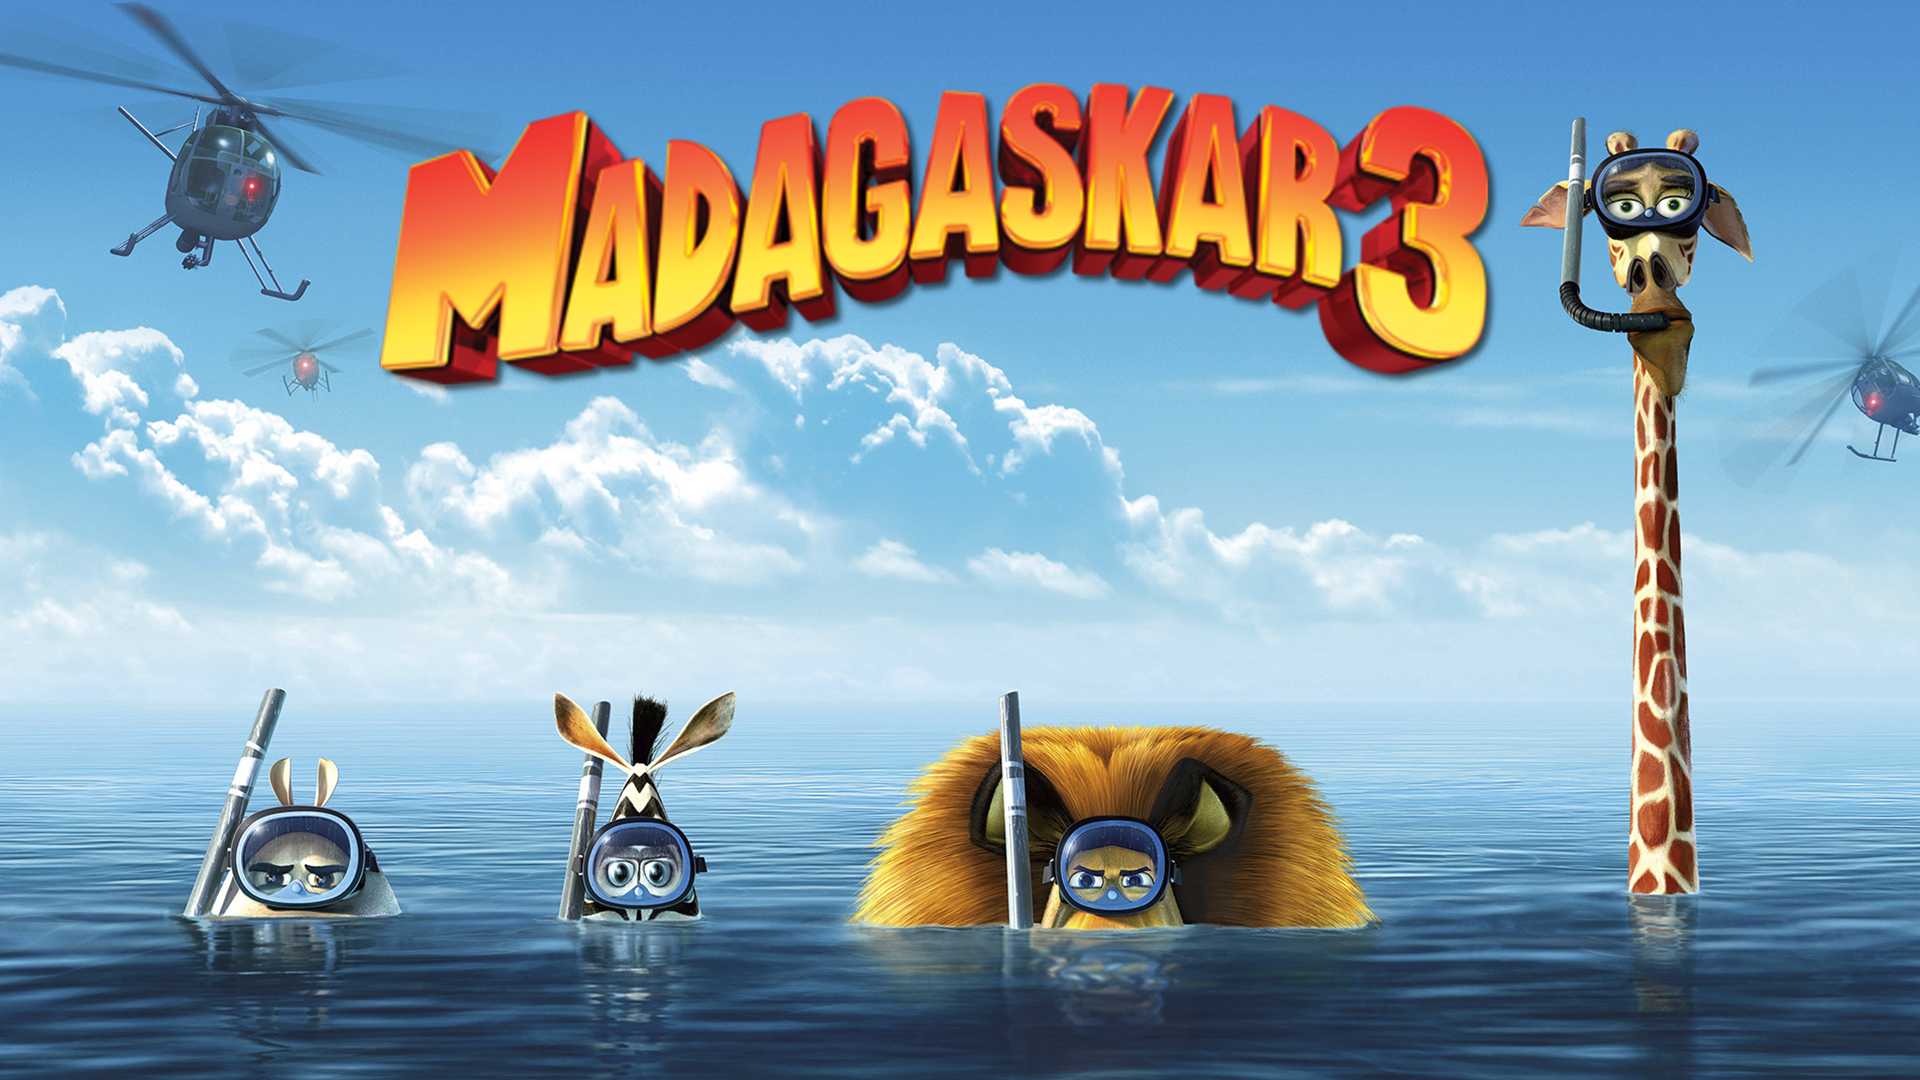 Madagaskar 3